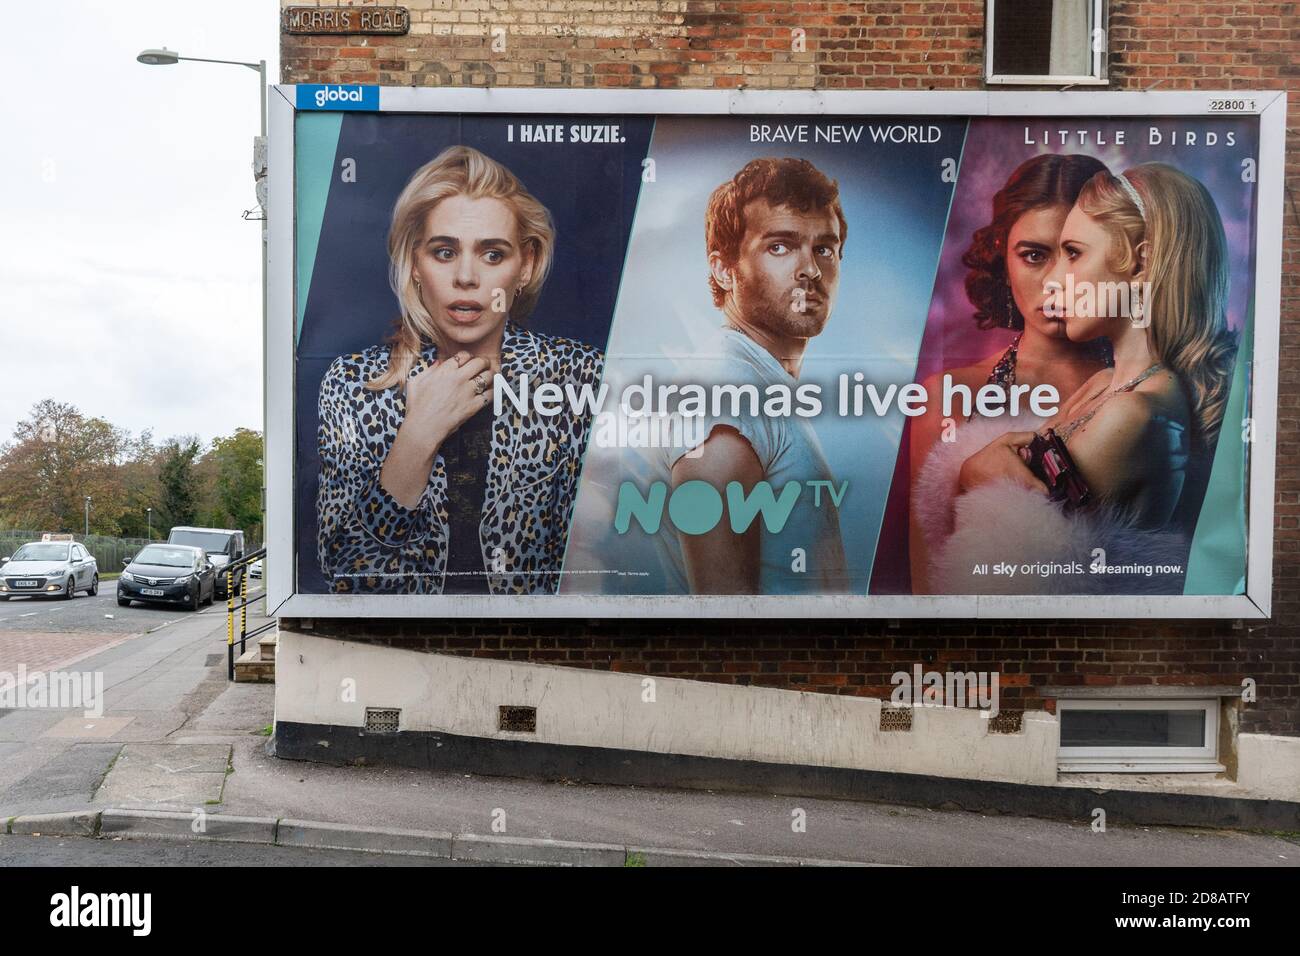 Large billboard advertisement for Now TV company new dramas, 2020, UK Stock Photo